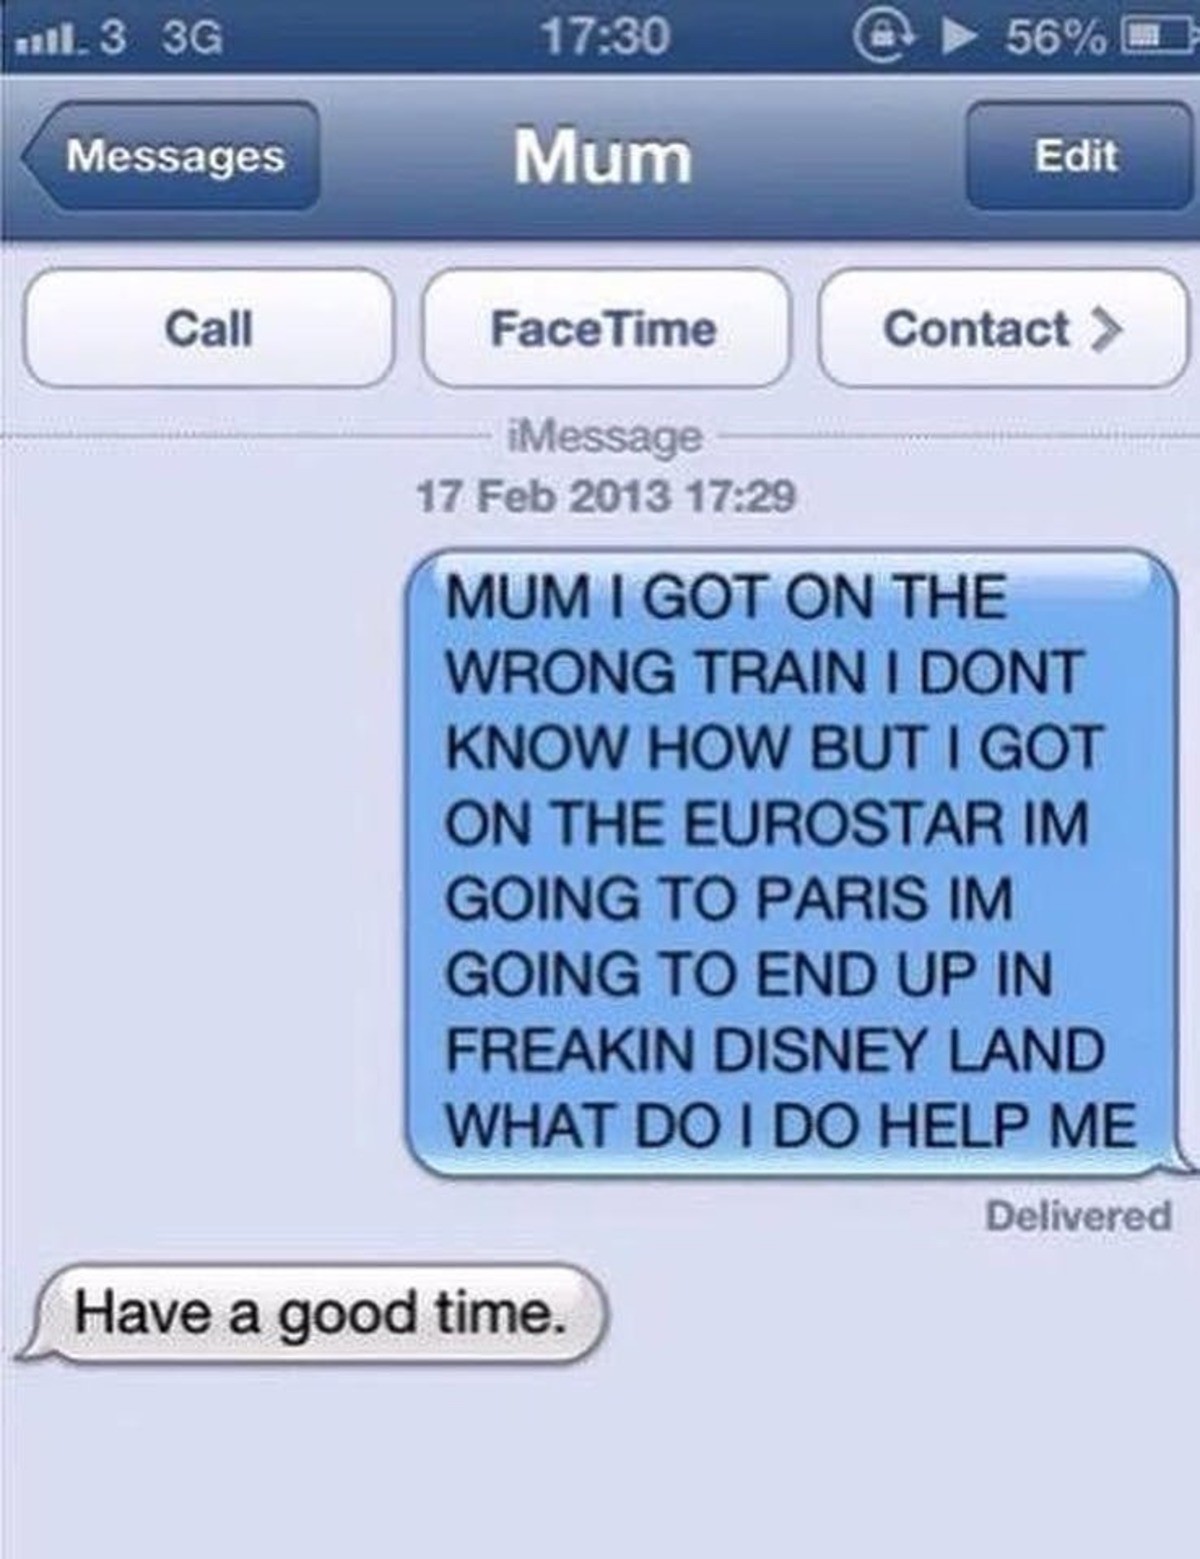 Times send message. Смешные опечатки в смс. Text message. Message from. SMS from mum.